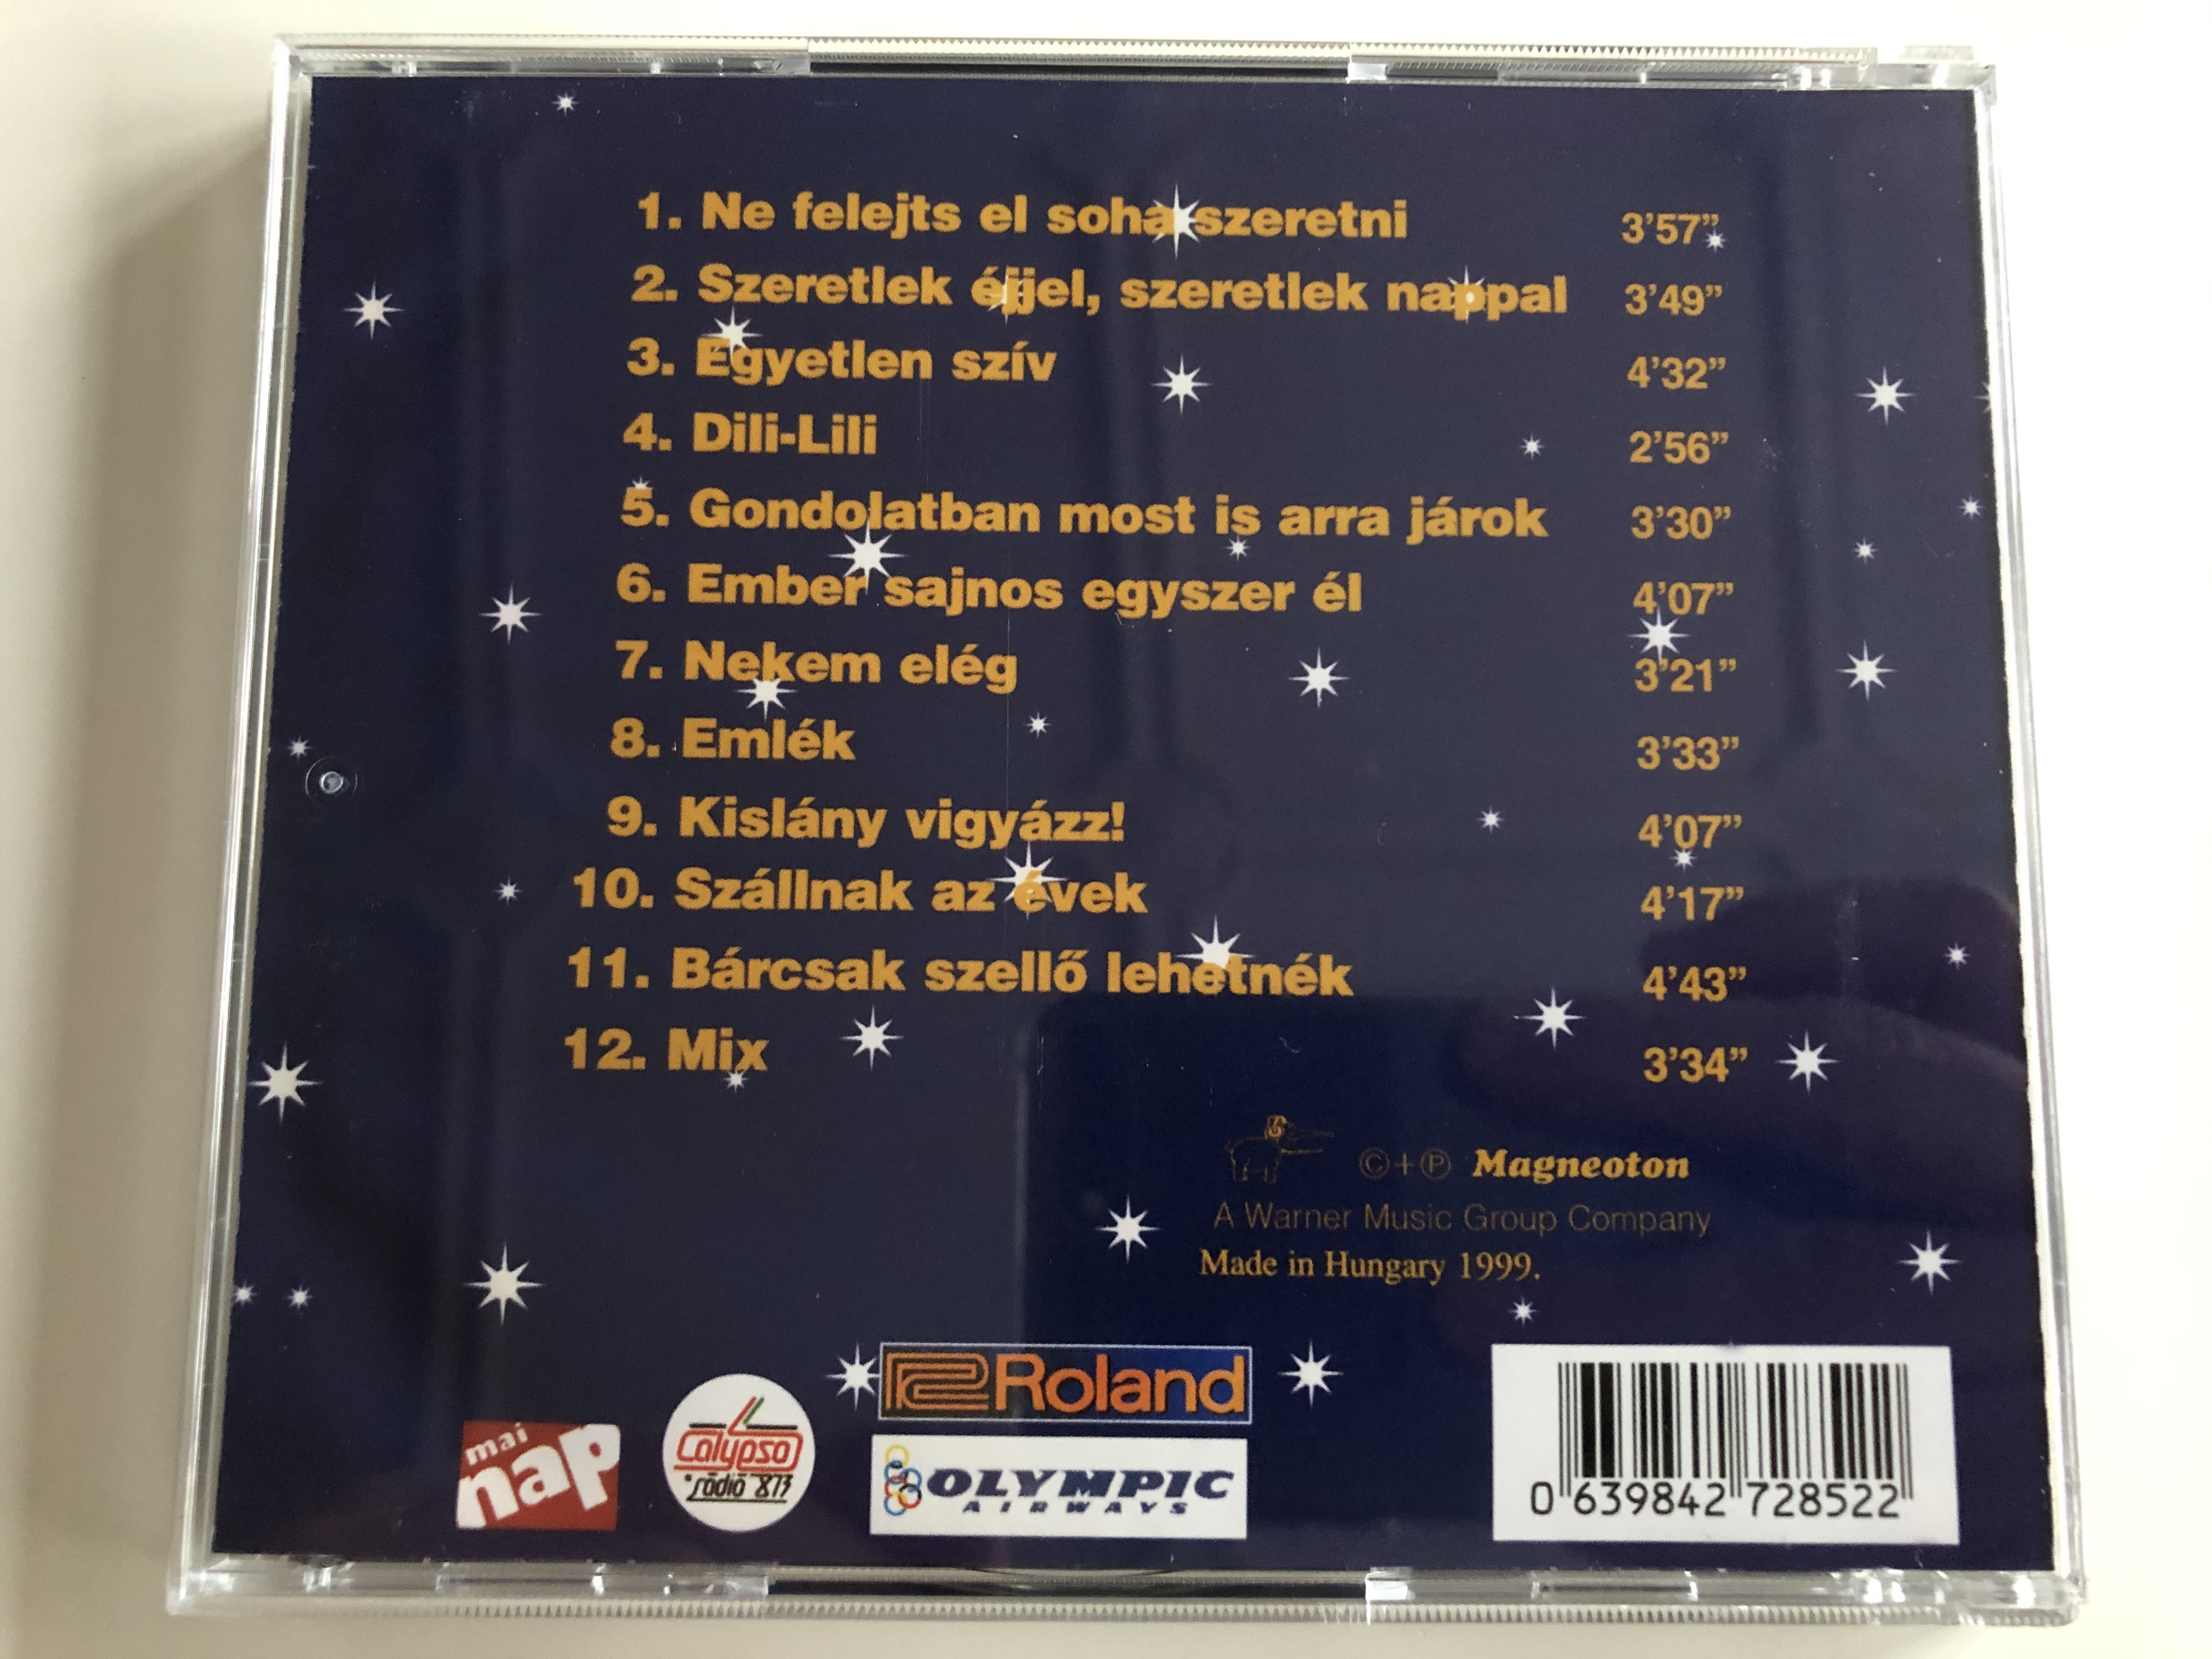 apostol-ne-felejts-el-soha-szeretni-magneoton-audio-cd-1999-4.jpg